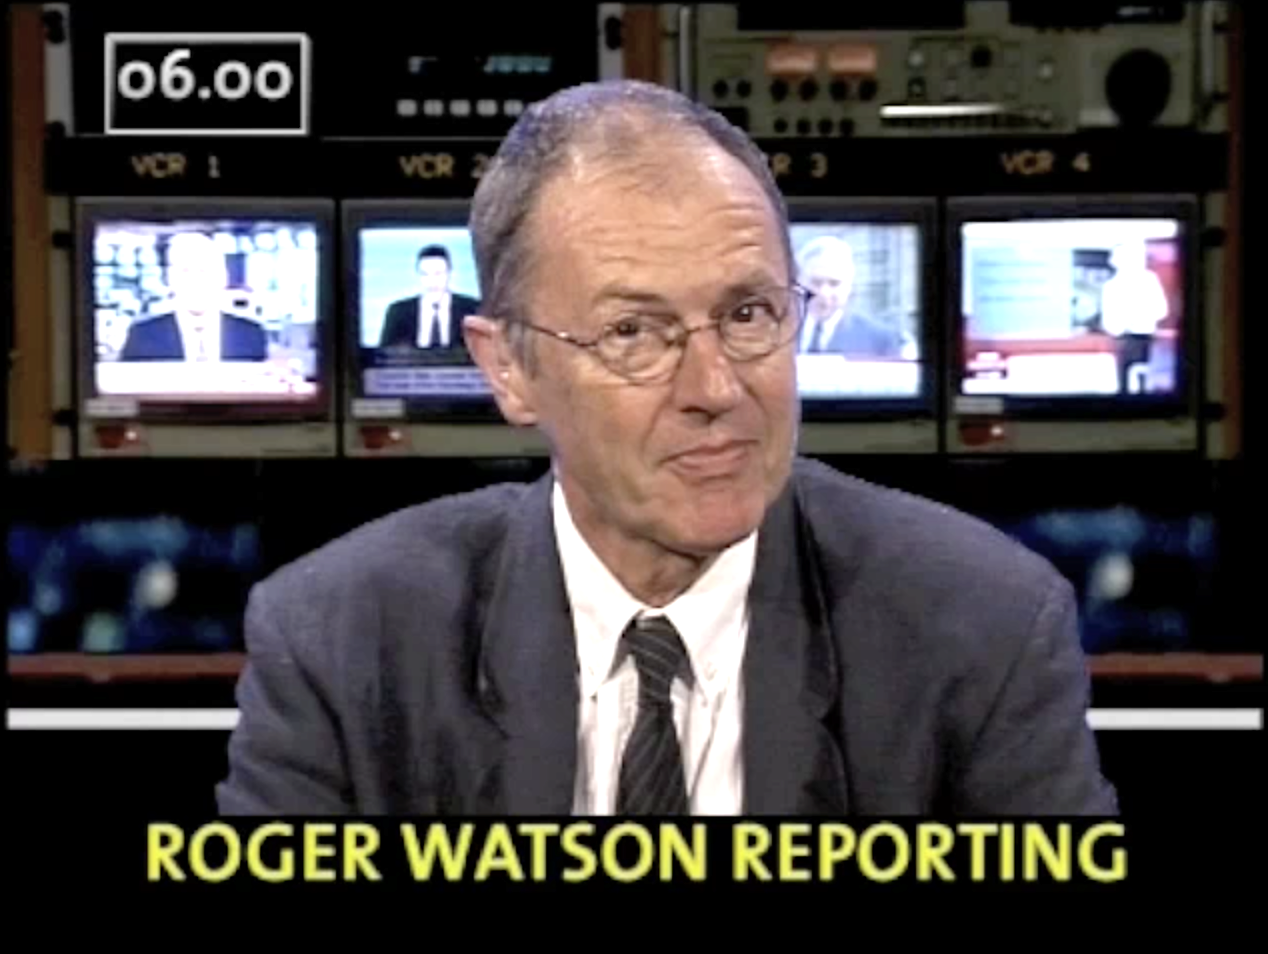 Roger Watson TV presenter